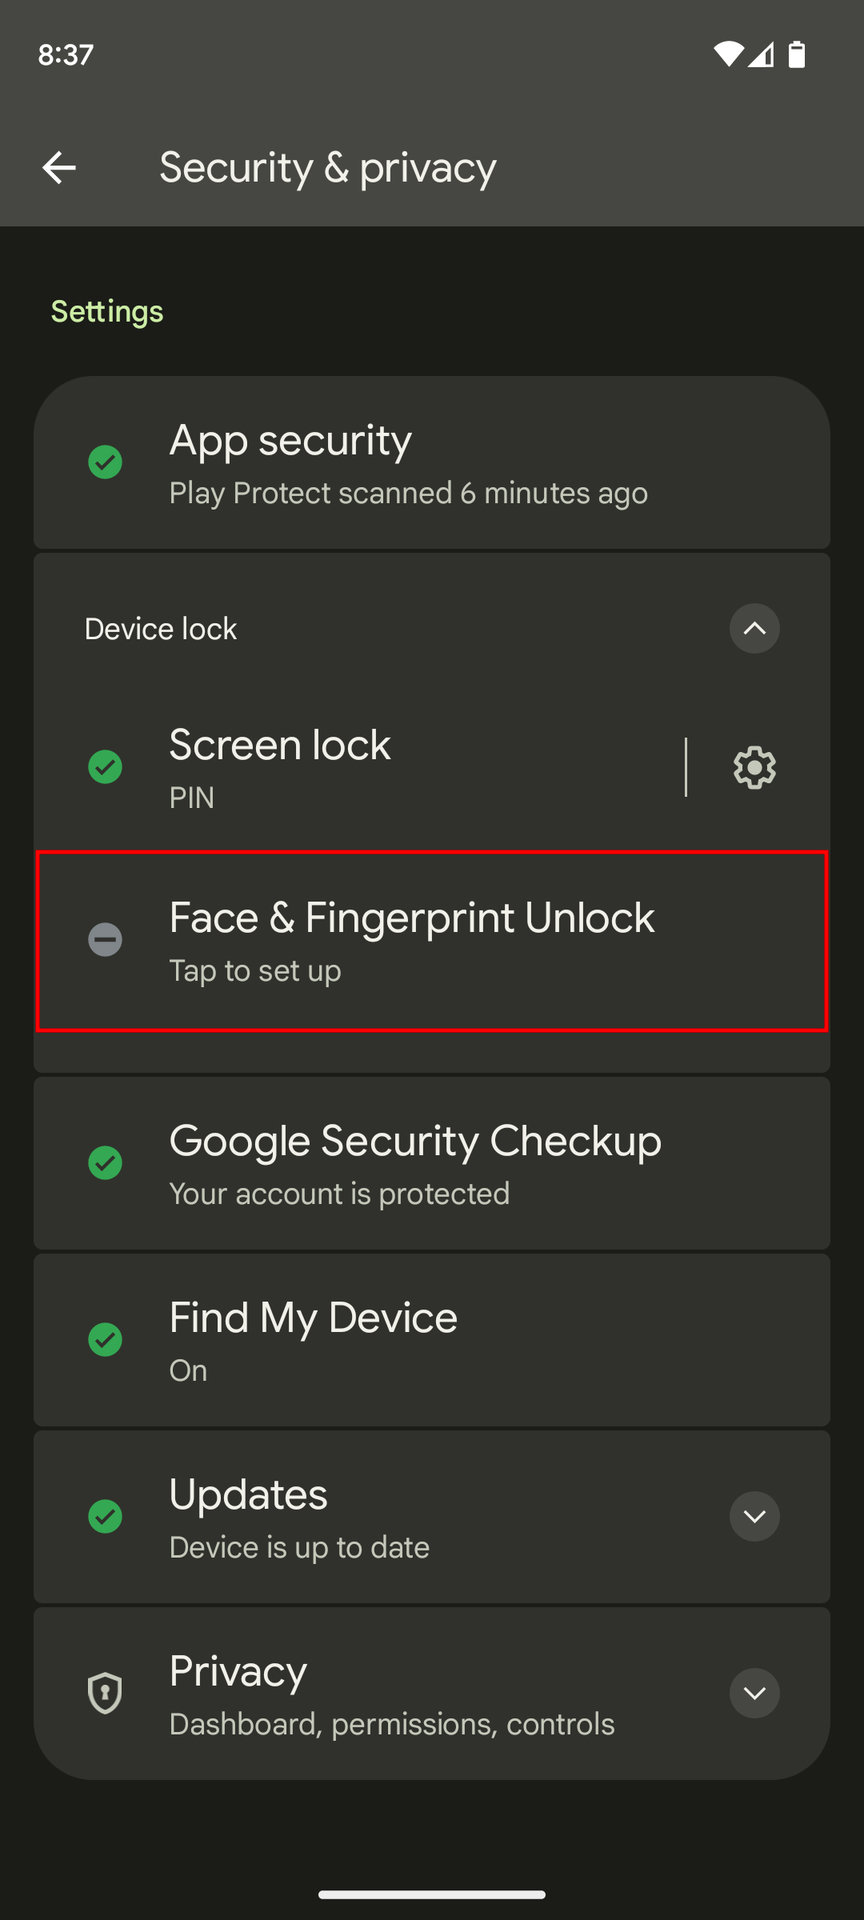 How to set up Fingerprint Unlock on Pixel 3